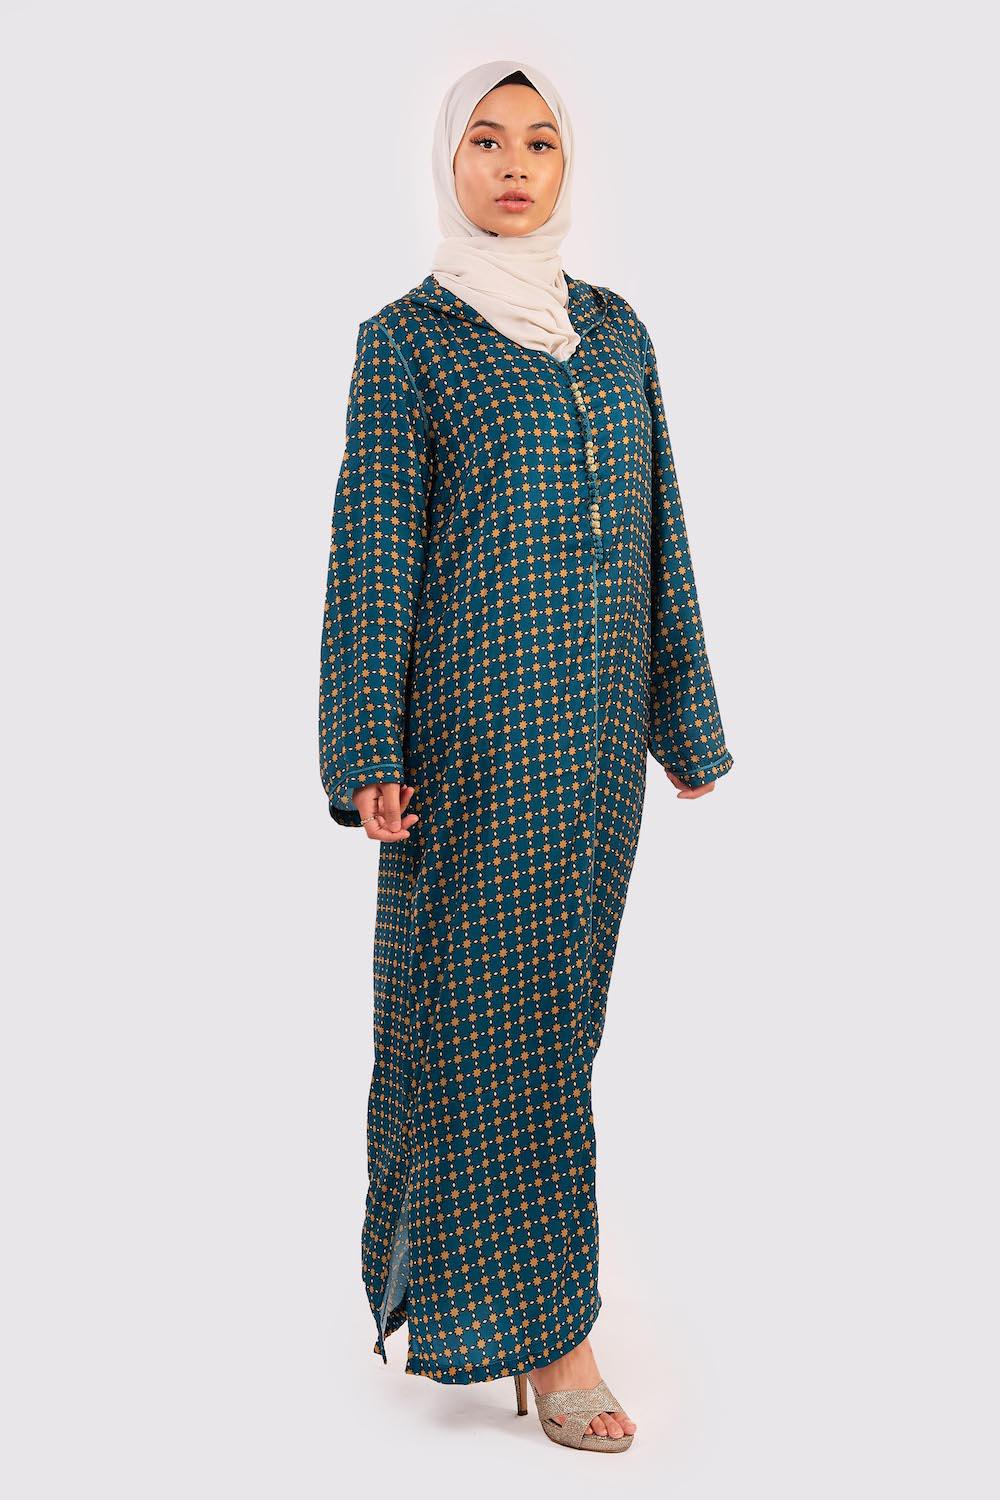 Djellaba Belkis Hooded Print Maxi Dress Kaftan in Teal Print